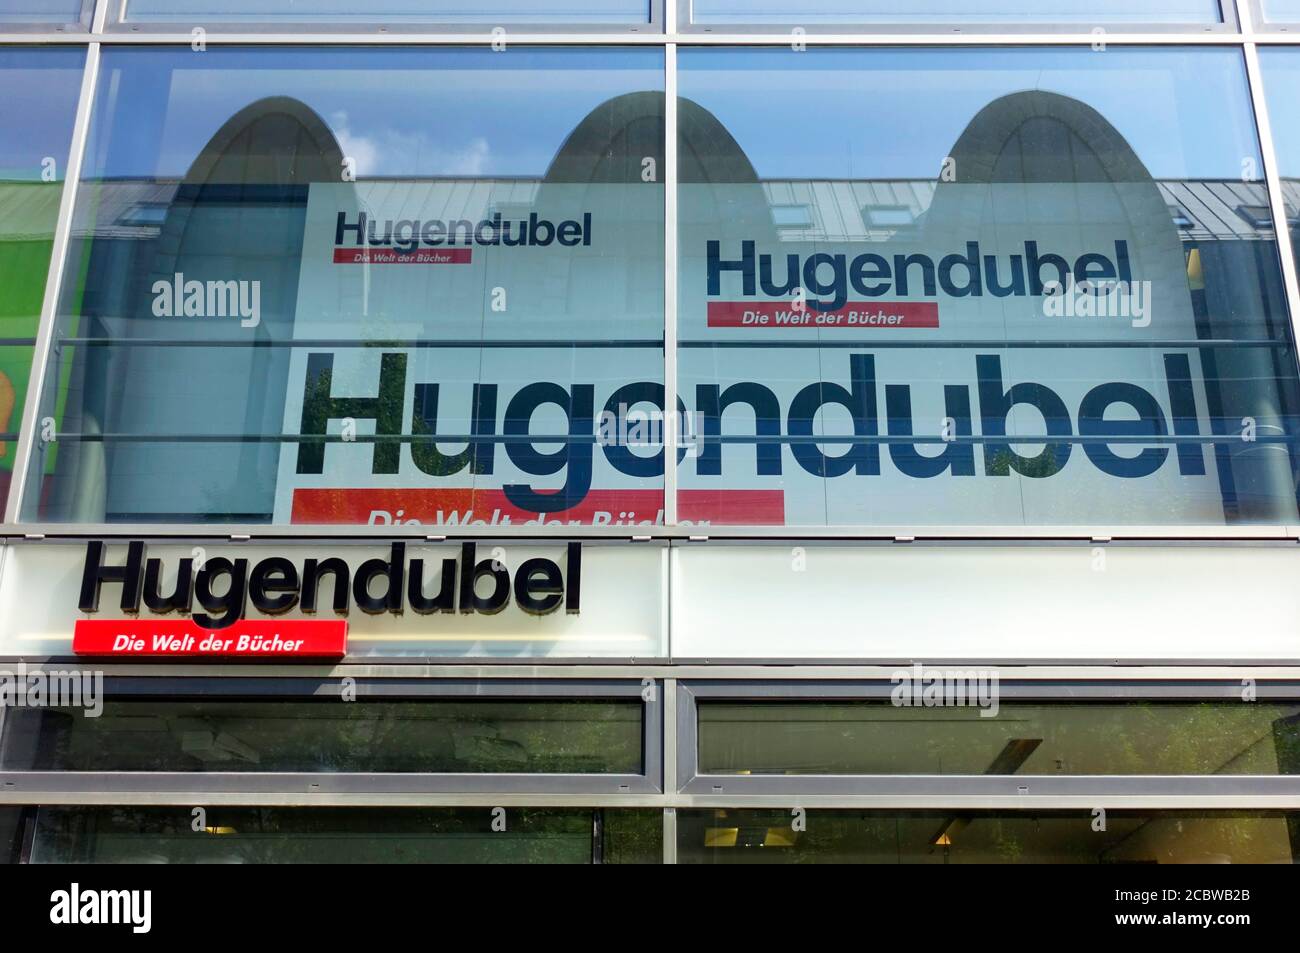 Hugendubel in Berlin, Germany Stock Photo - Alamy